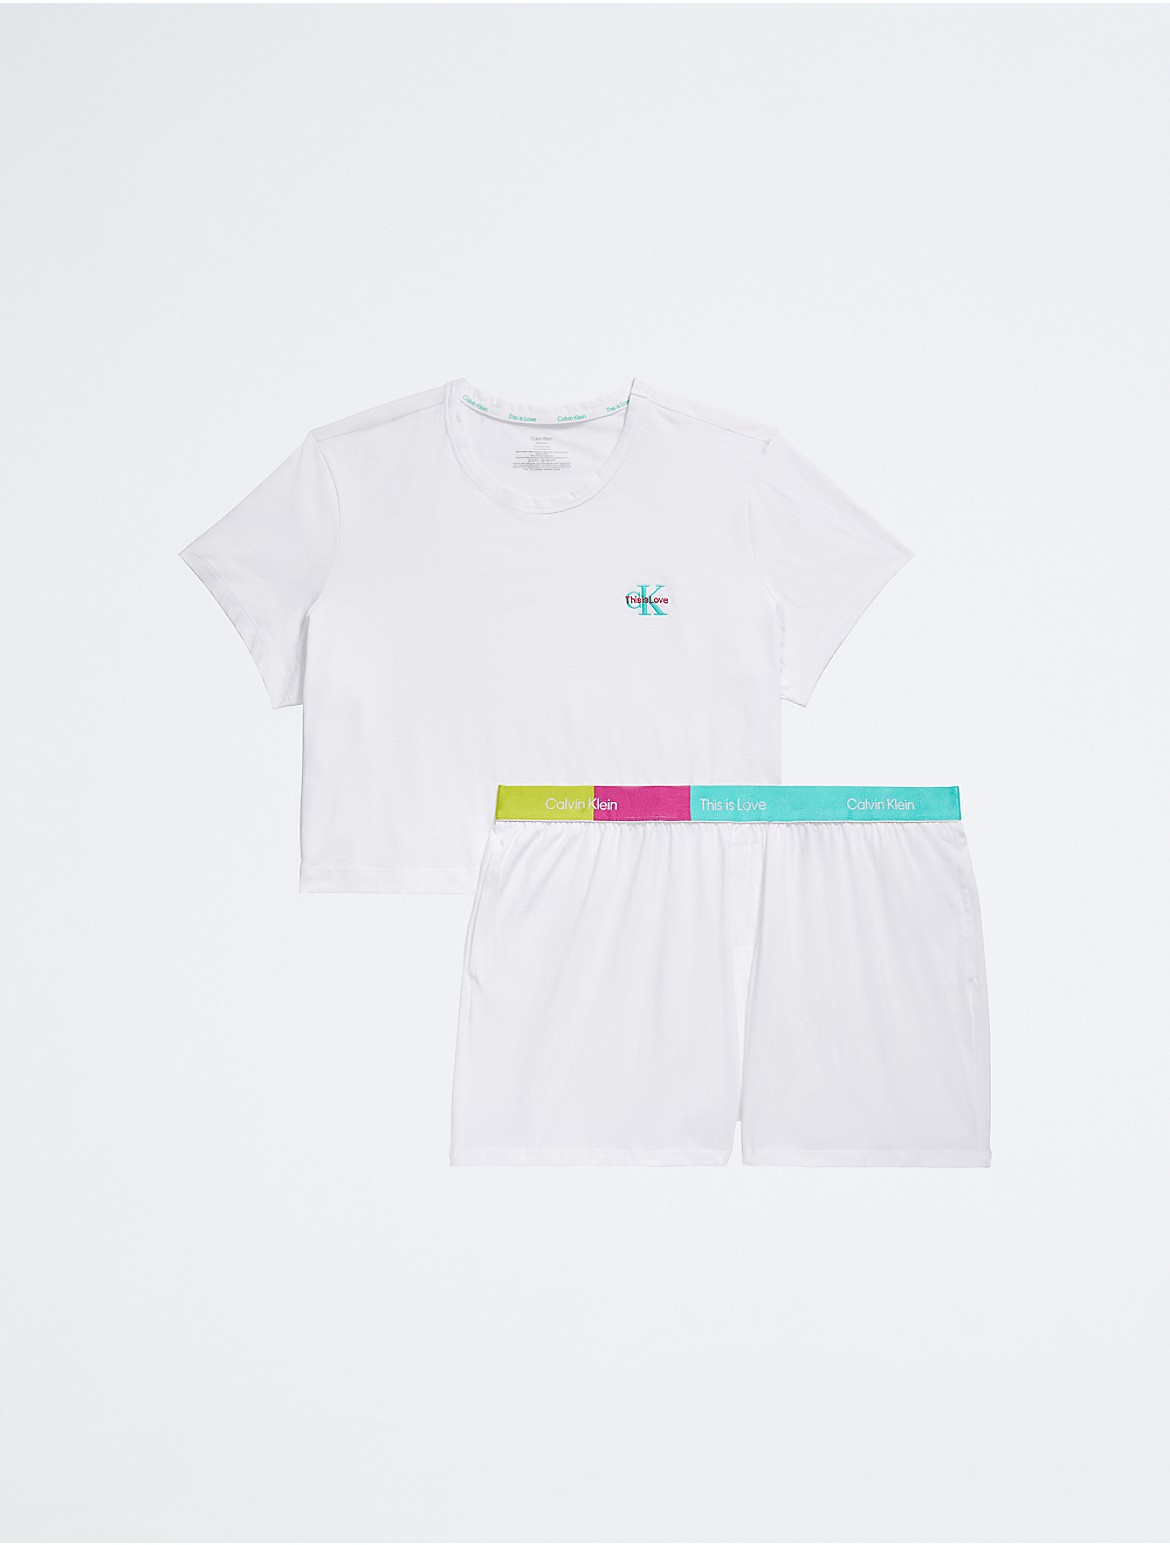 Calvin Klein Women's Pride This Is Love Plus Size Sleep T-Shirt + Shorts Set - White - 1X